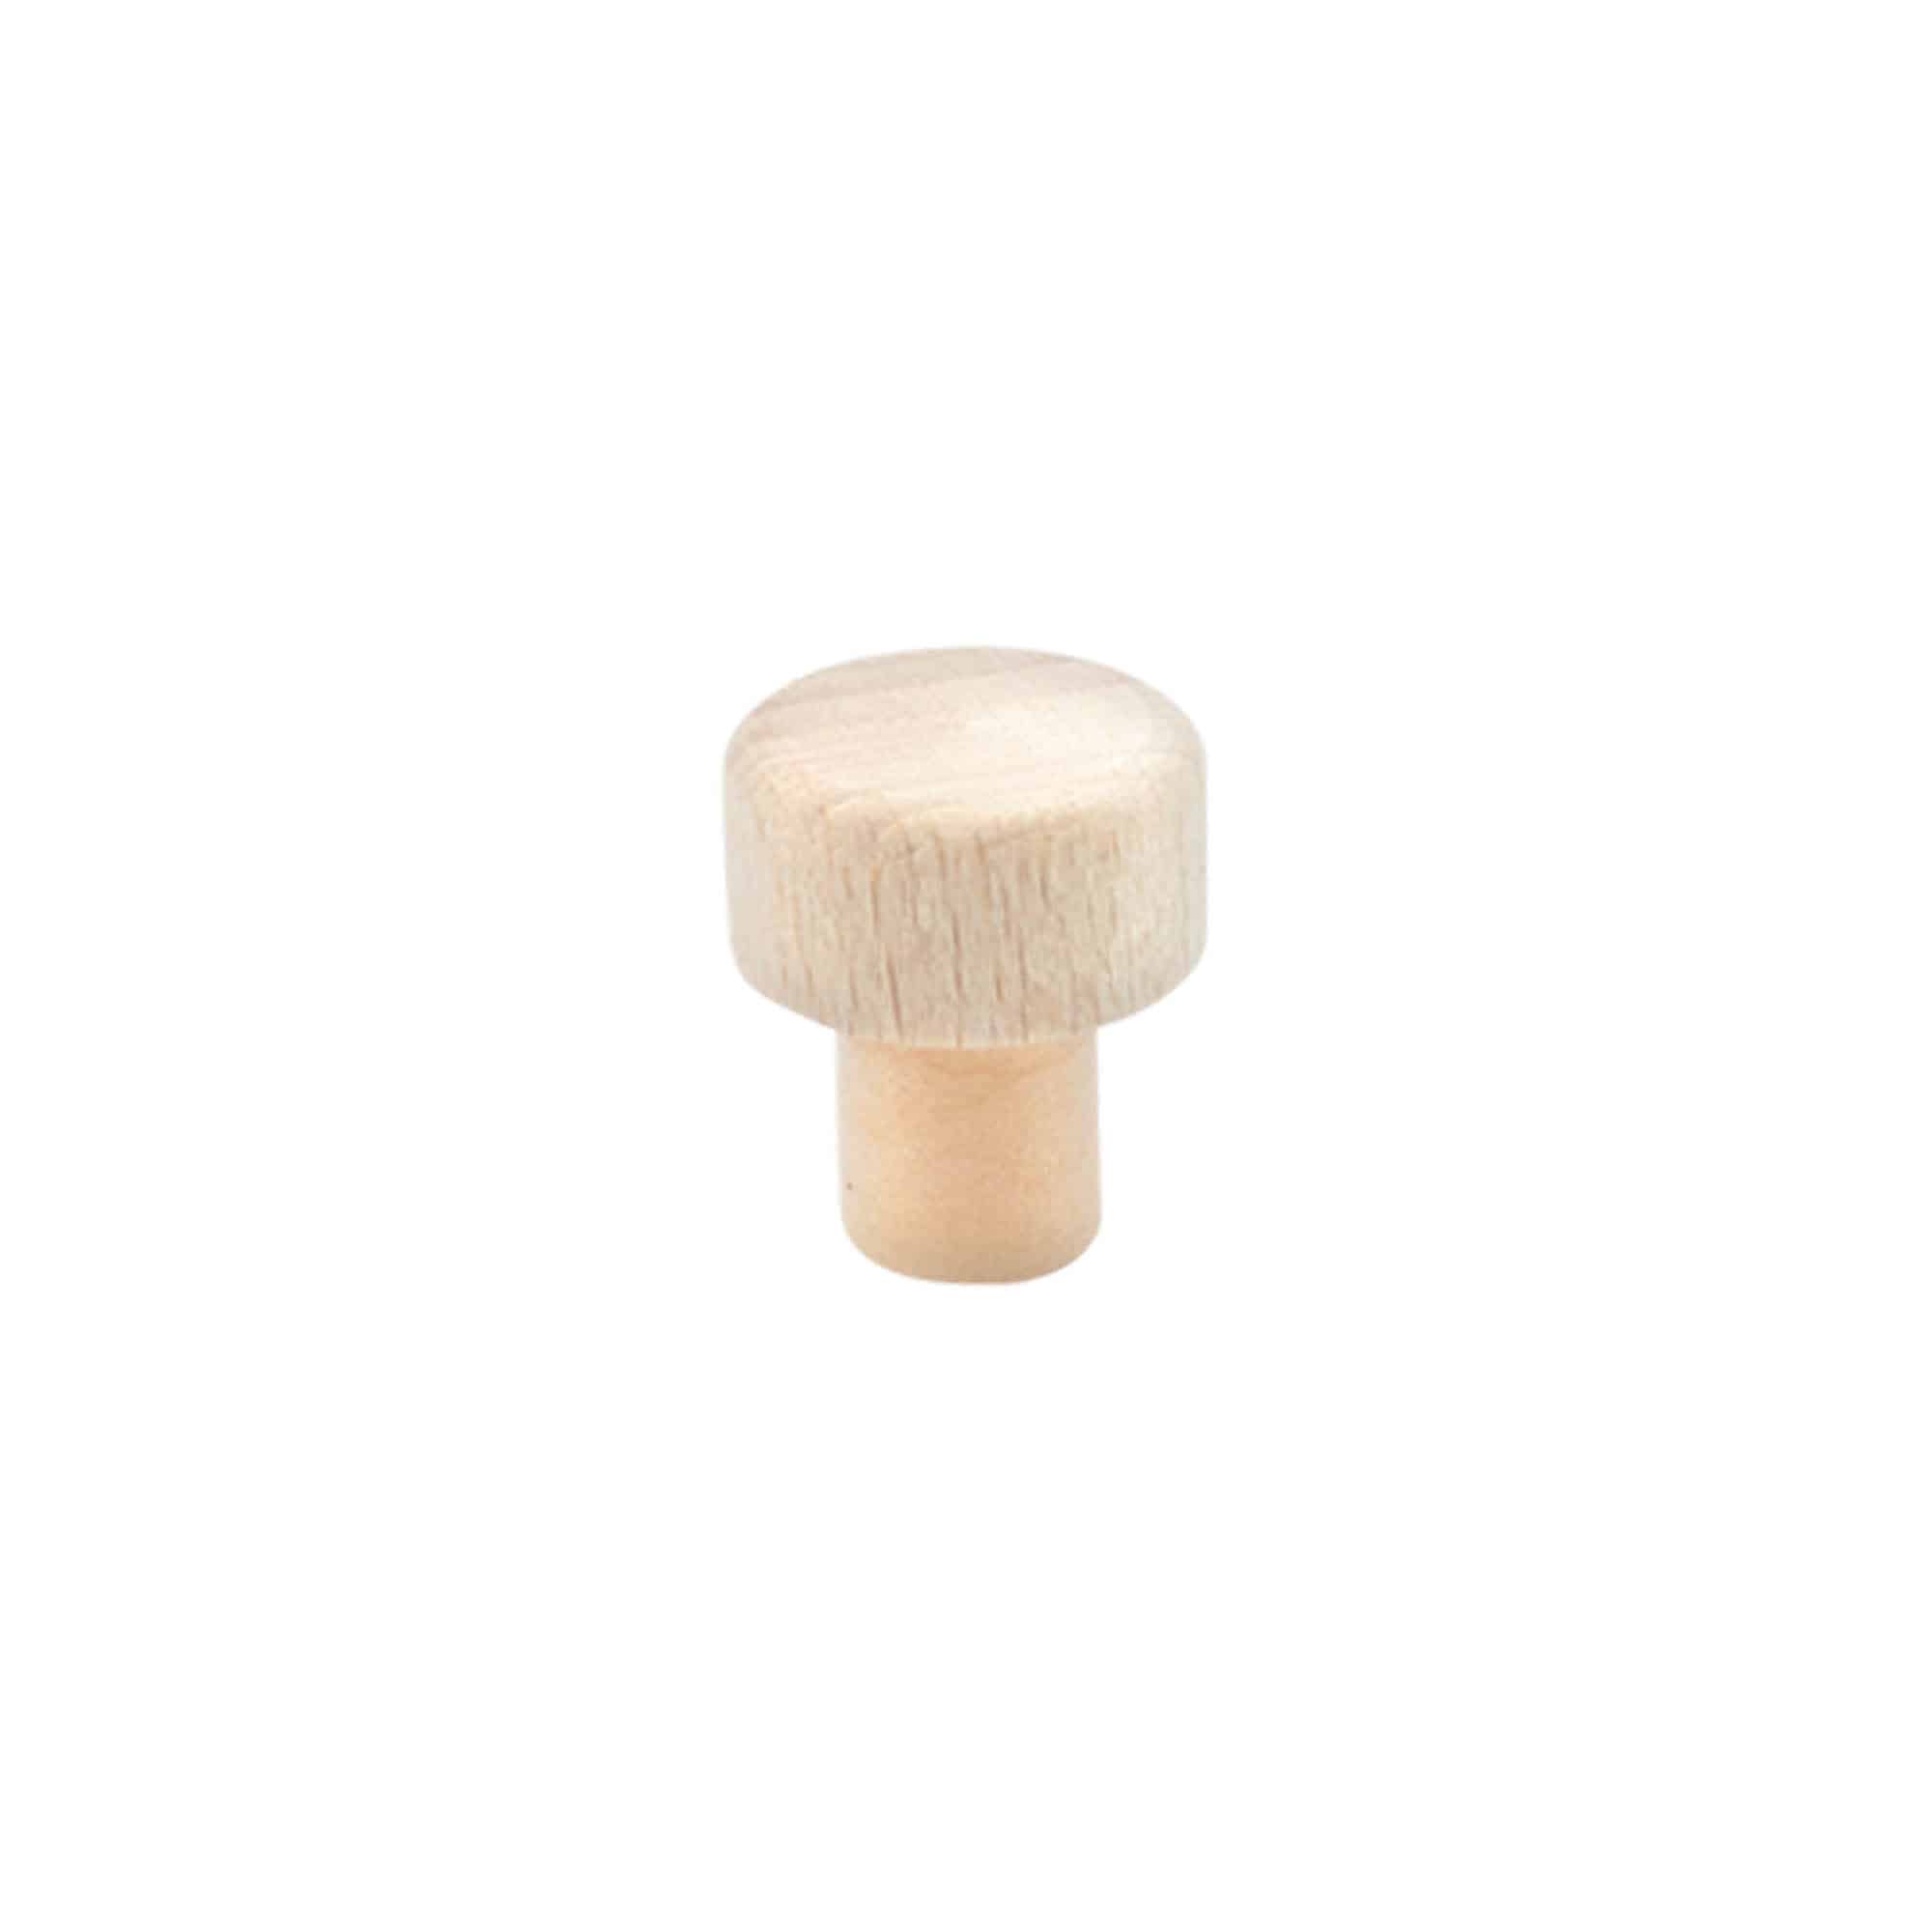 11 mm mushroom cork, wood, for opening: cork